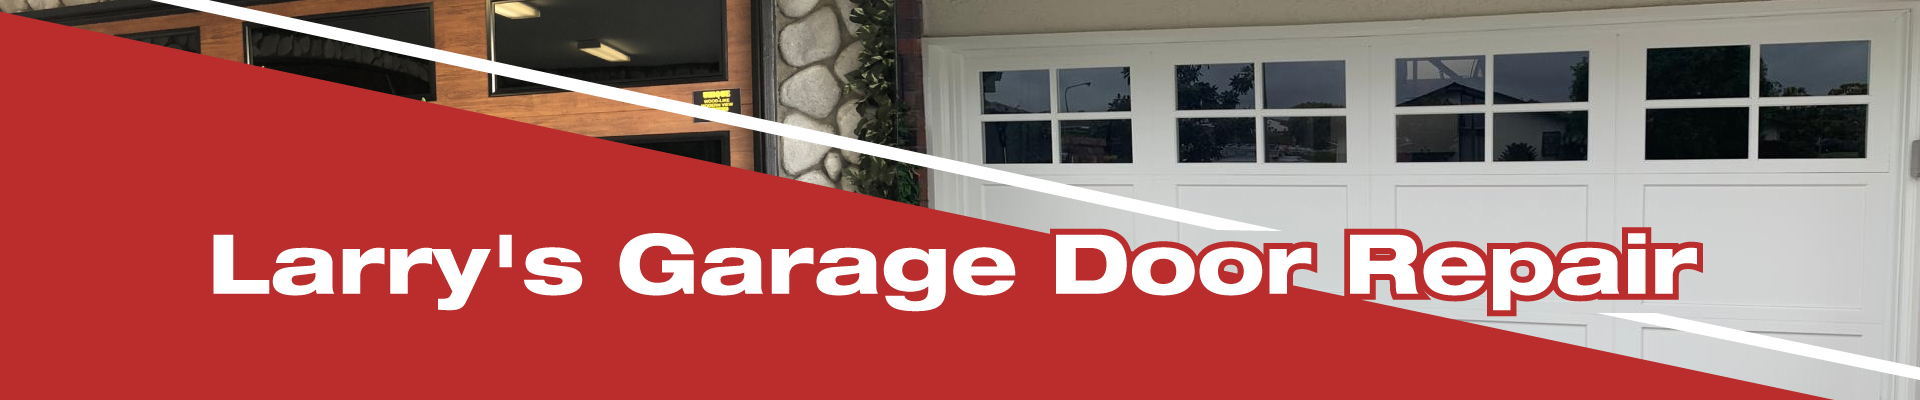 Garage Door Repair Madera